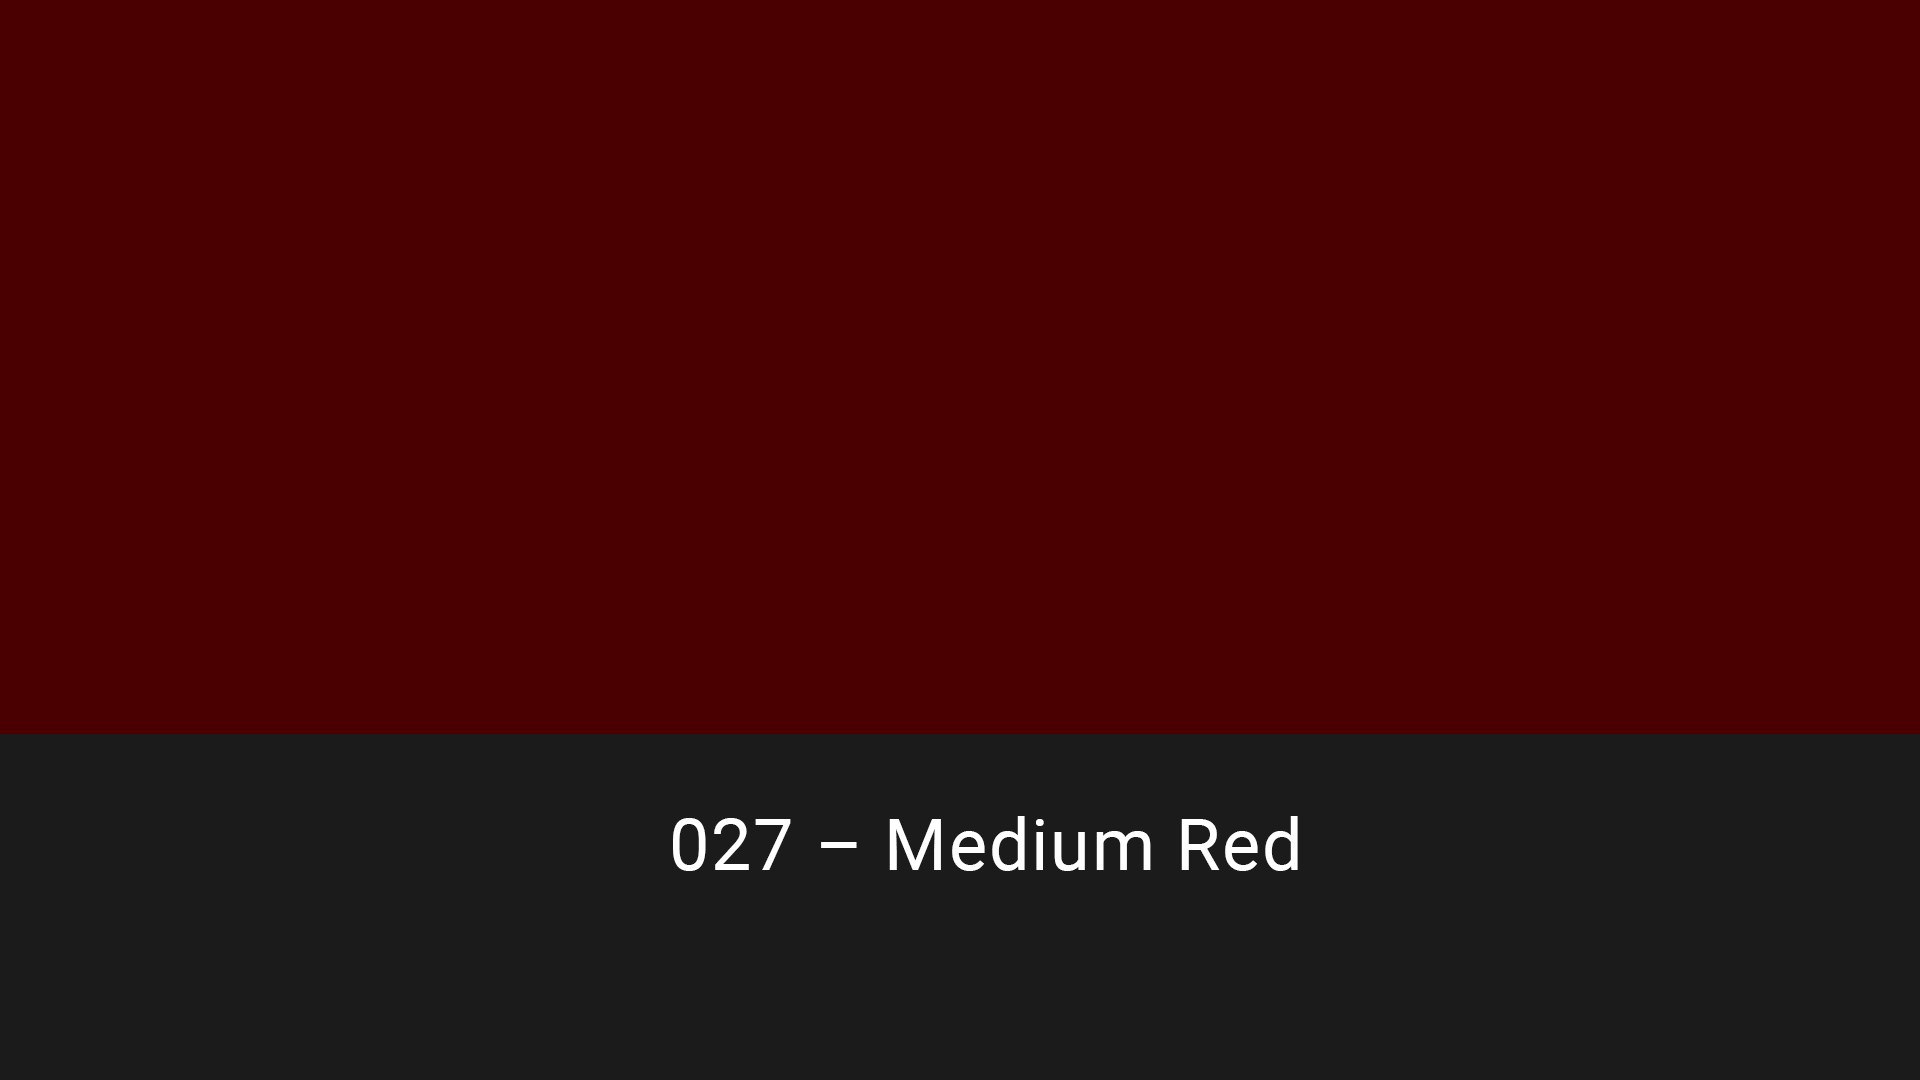 Cotech filters 027 Medium Red